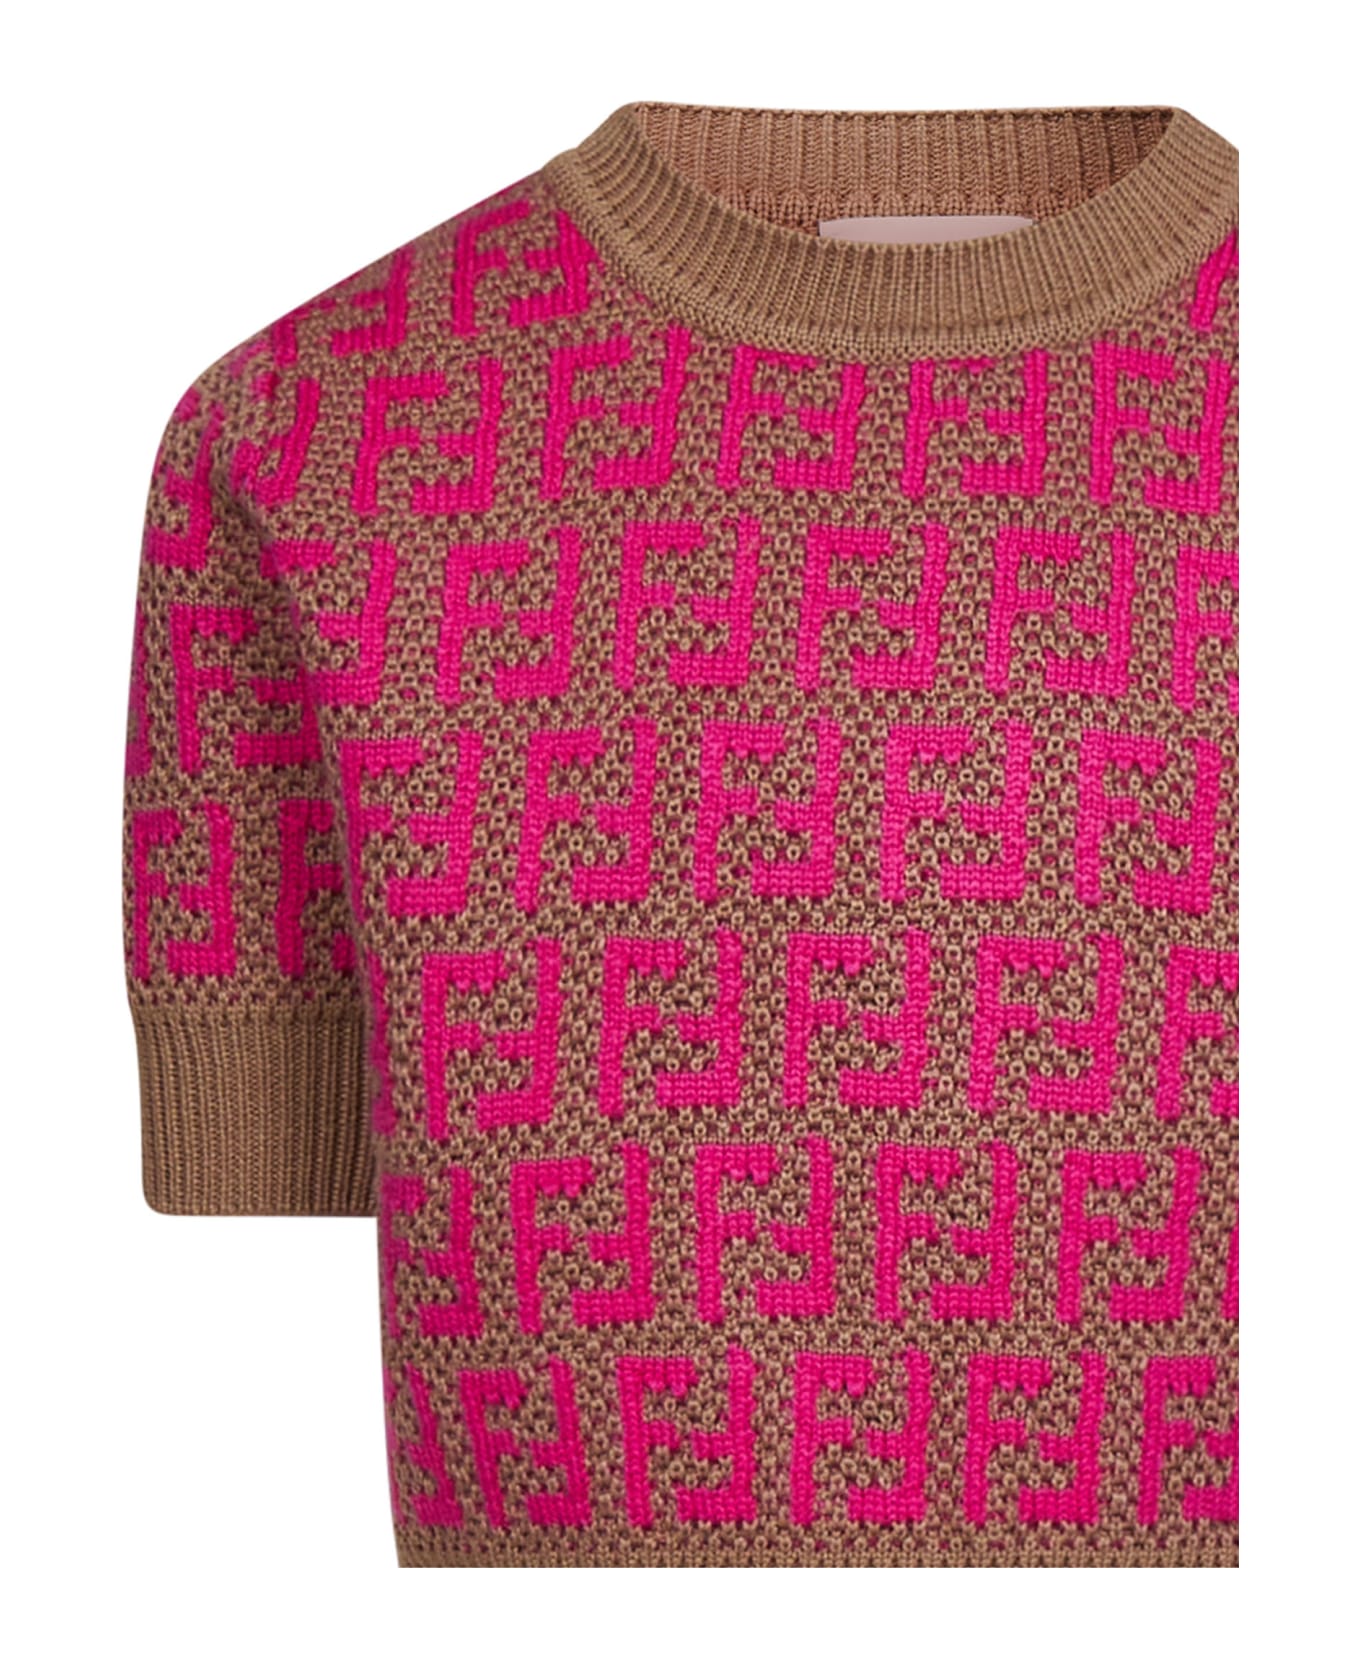 Fendi Kids Sweater - Brown